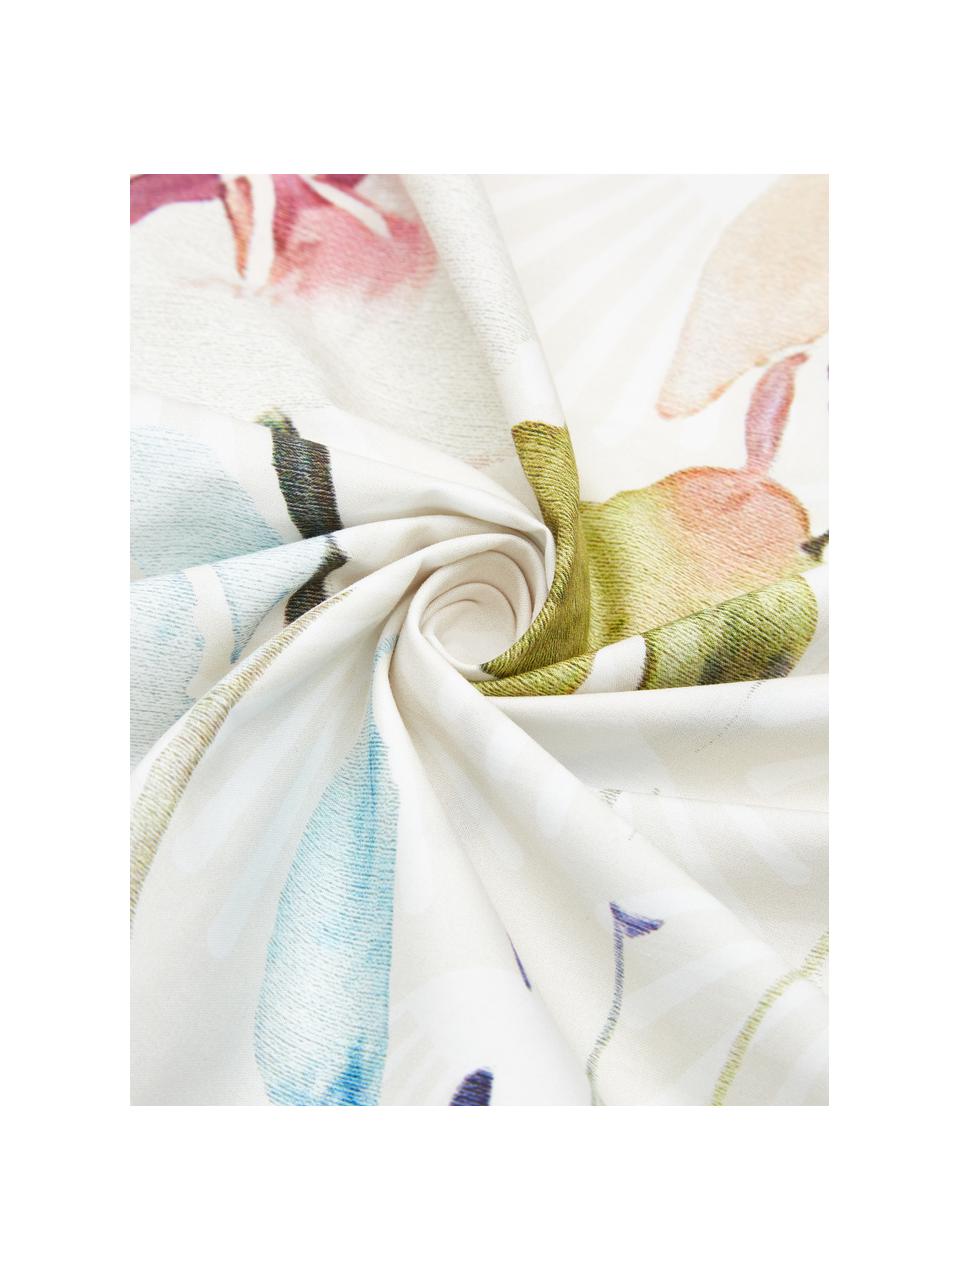 Baumwollperkal-Bettwäsche Edila mit Blumenmotiv in Bunt, Webart: Perkal Perkal ist ein fei, Weiß, Mehrfarbig, 135 x 200 cm + 1 Kissen 80 x 80 cm